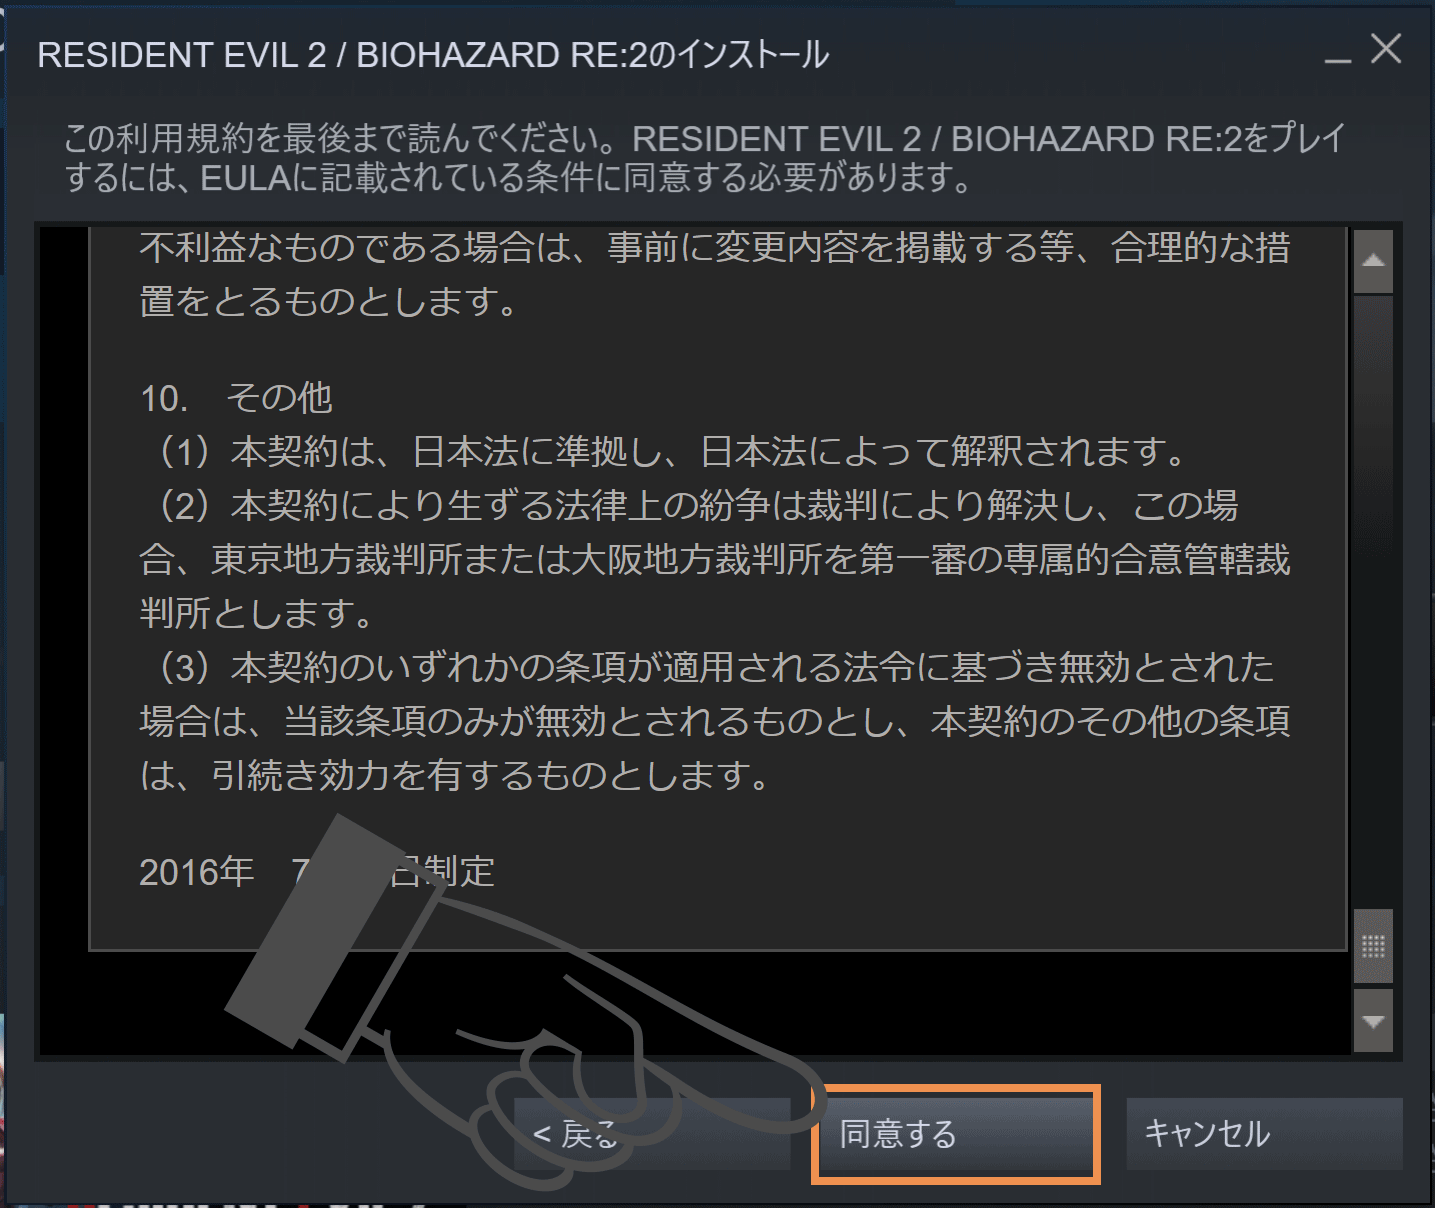 Zバージョンを超えるグロさ Gamesplanet経由で日本語吹き替え 字幕対応の 無規制版バイオハザード Re 2 を購入してsteamでインストールして遊ぶまでの手順まとめ グロテスクさを求めて Otakenist